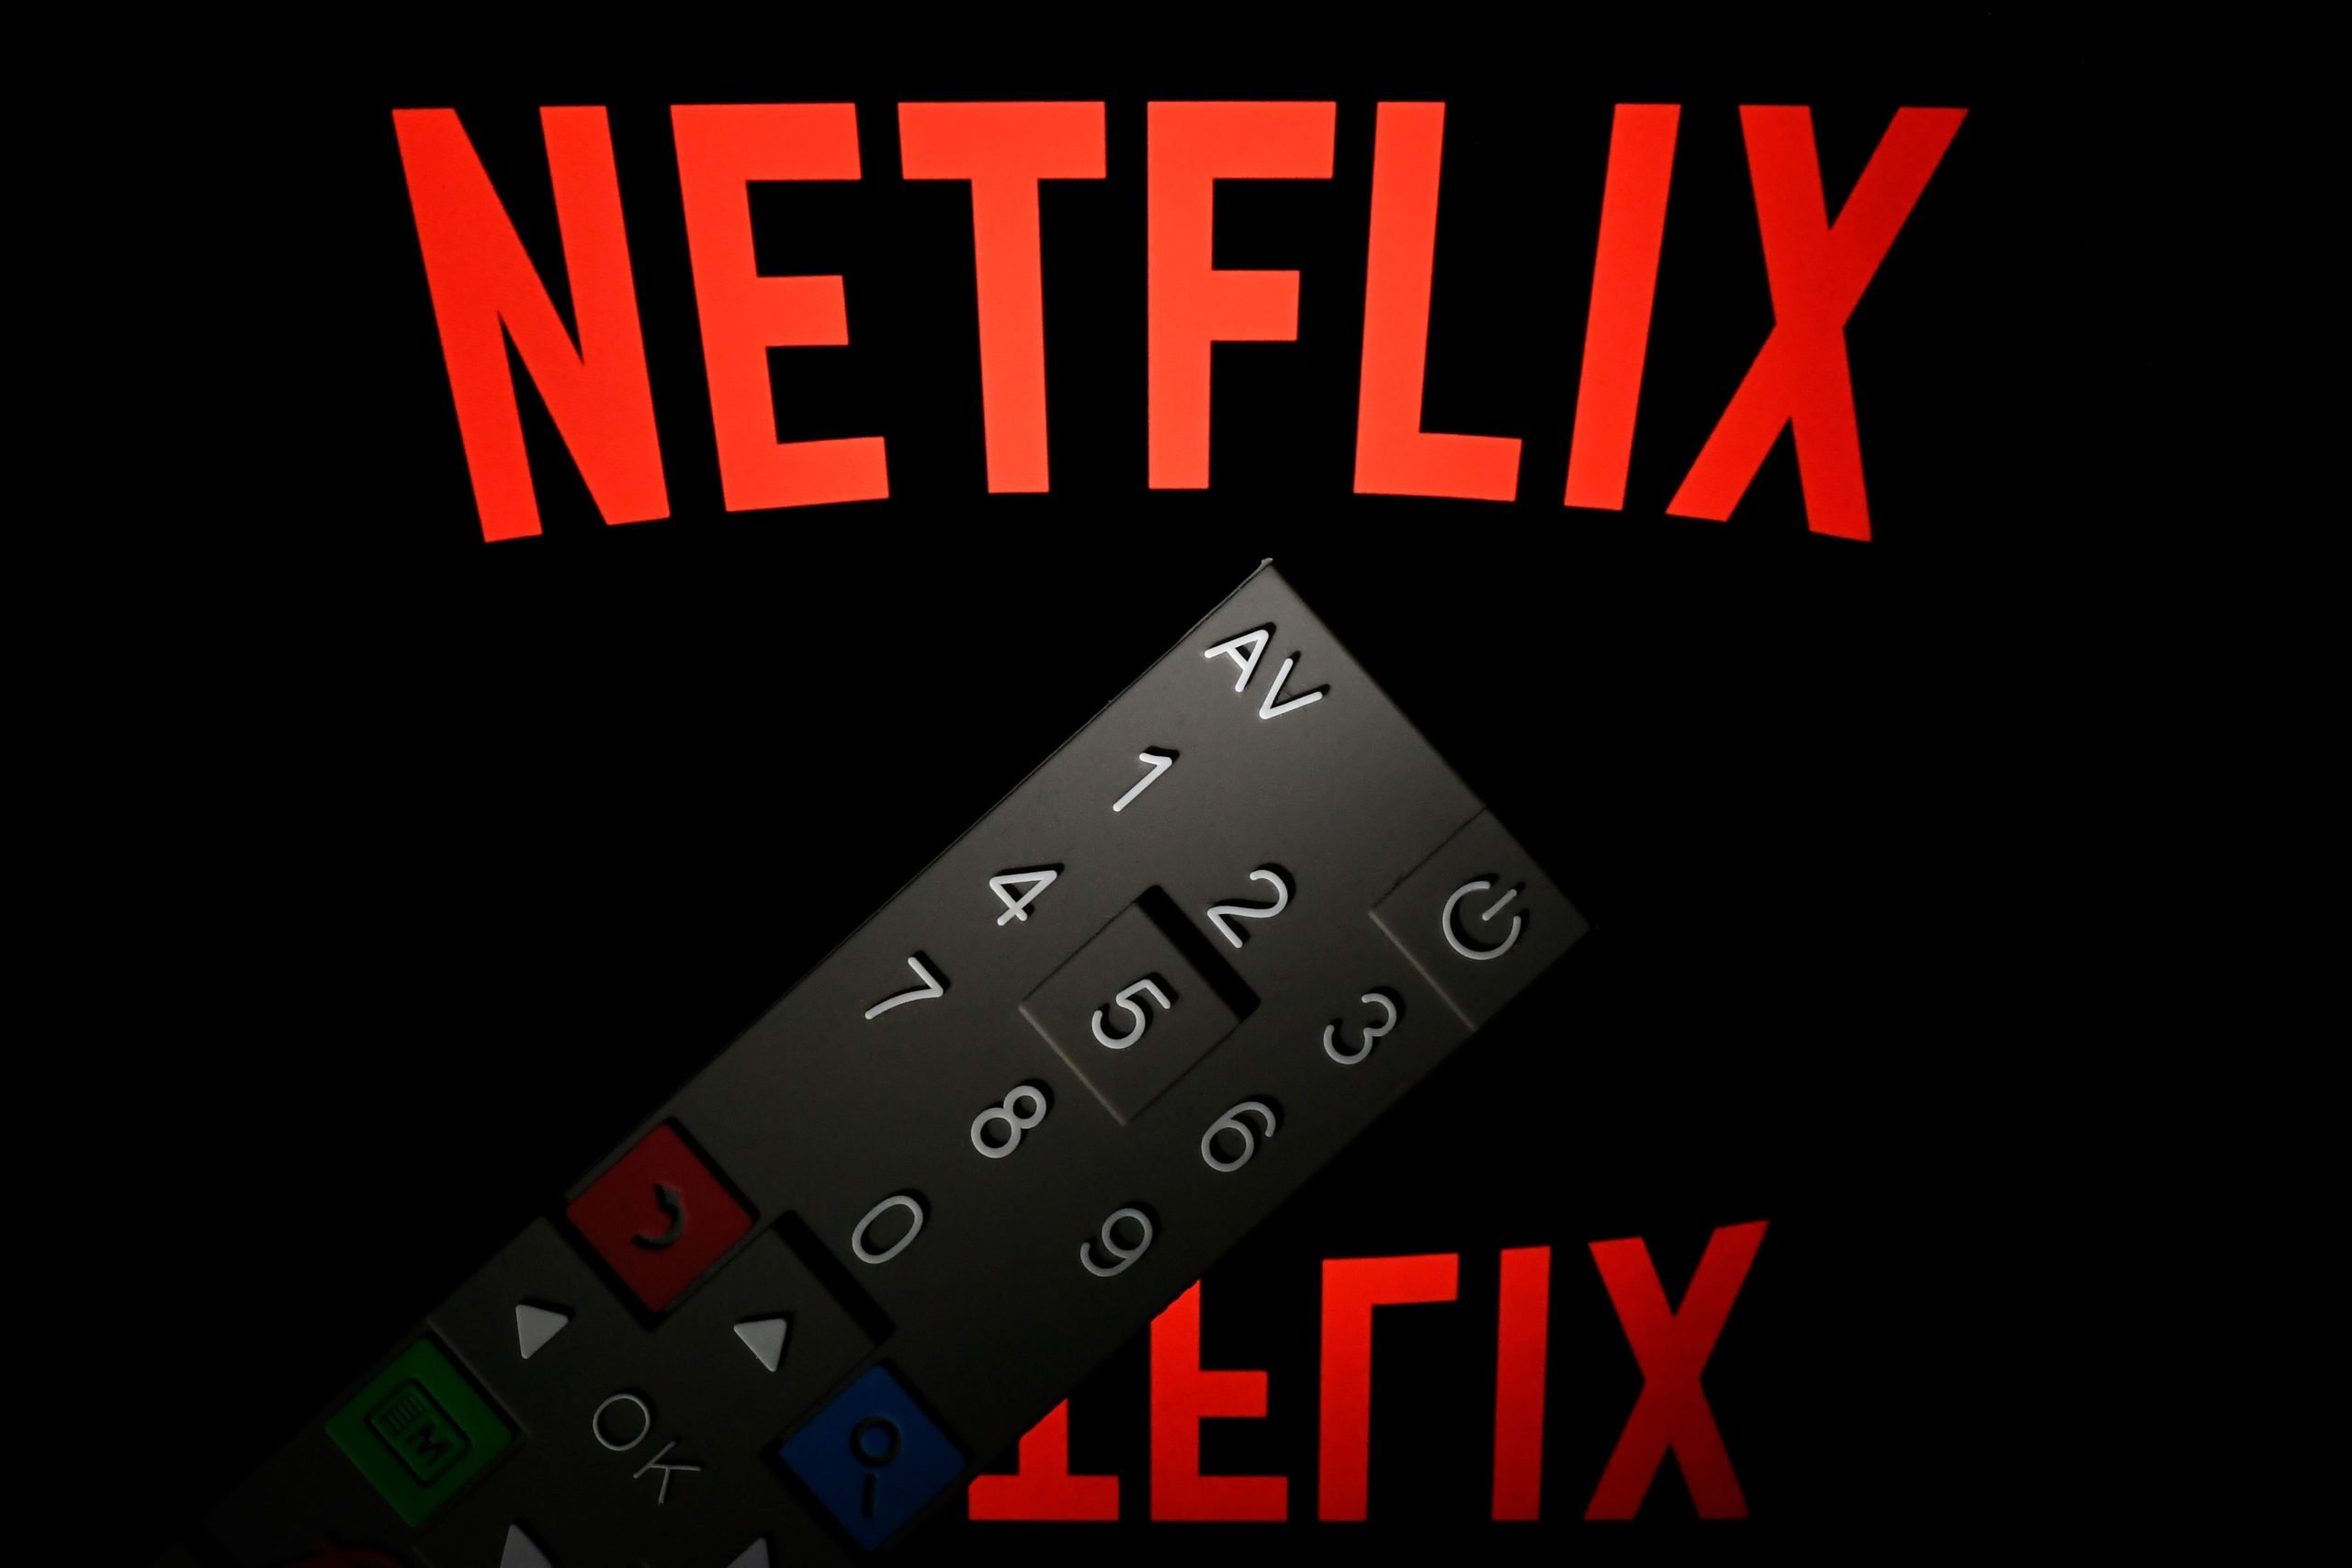 Netflix cracks down on password sharing